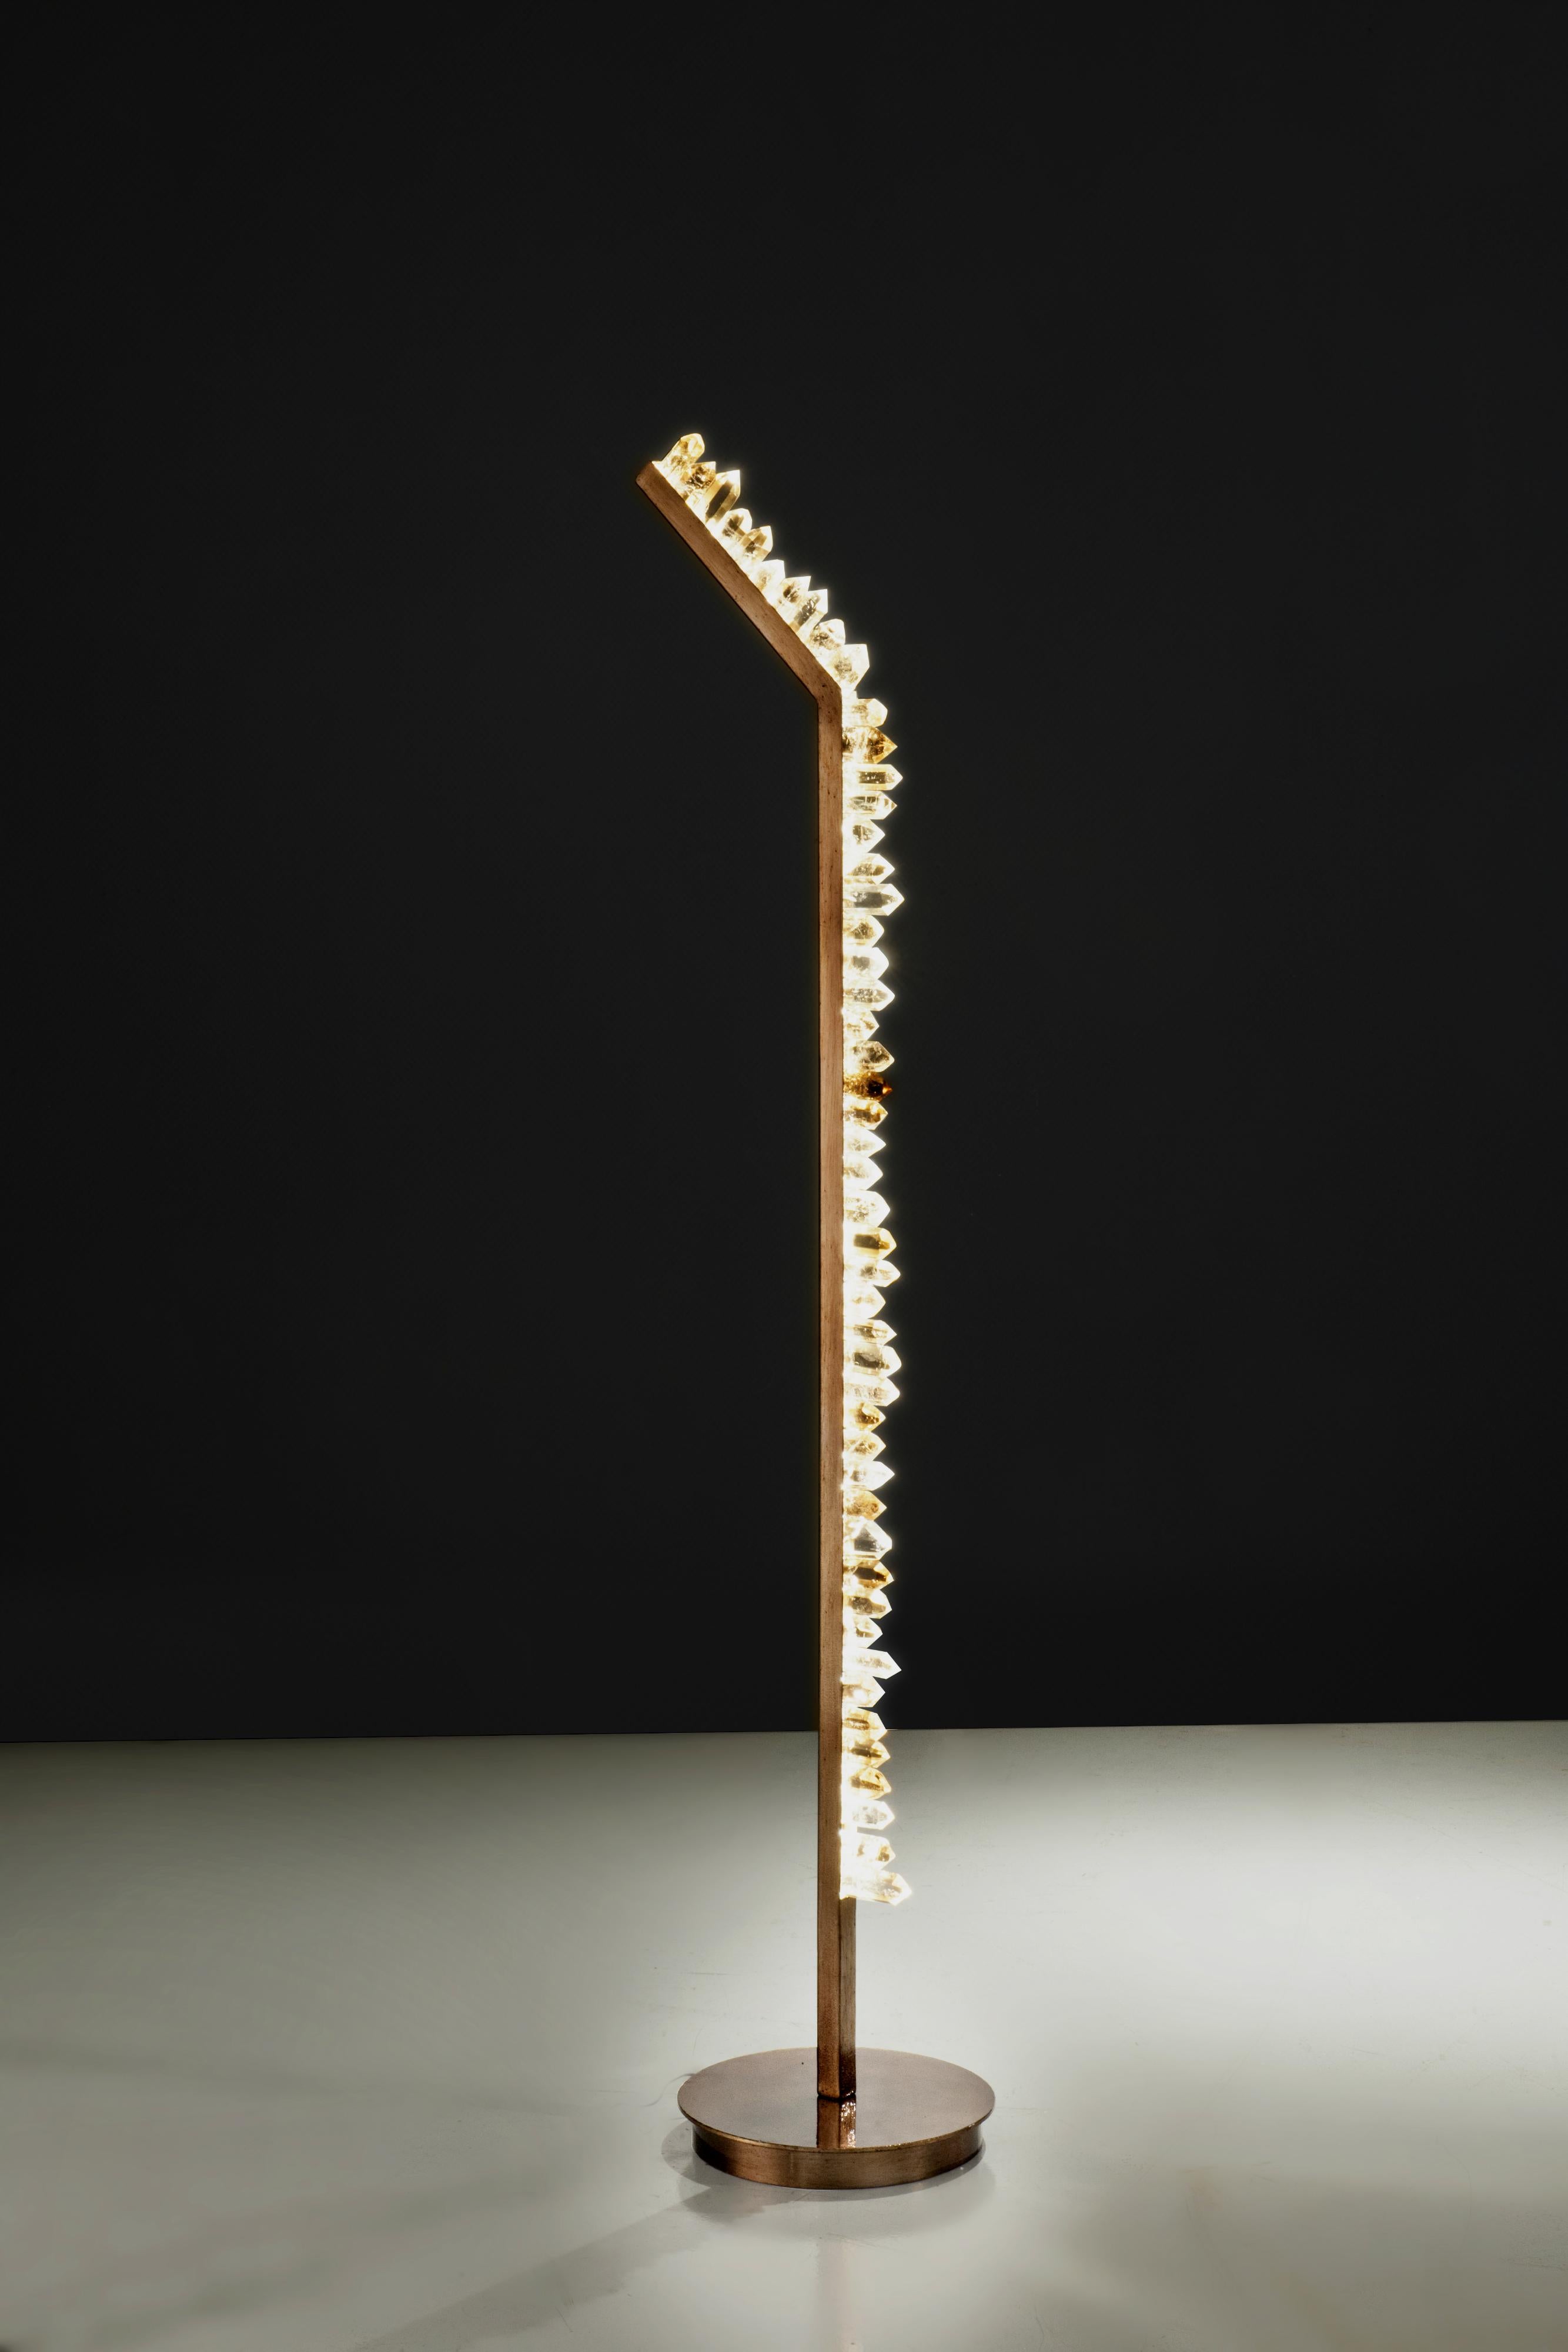 Hand-sculpted white quartz floor lamp
Measures: 170 x 30 x 20 cm
01 X LED 7W / 450 lumens.